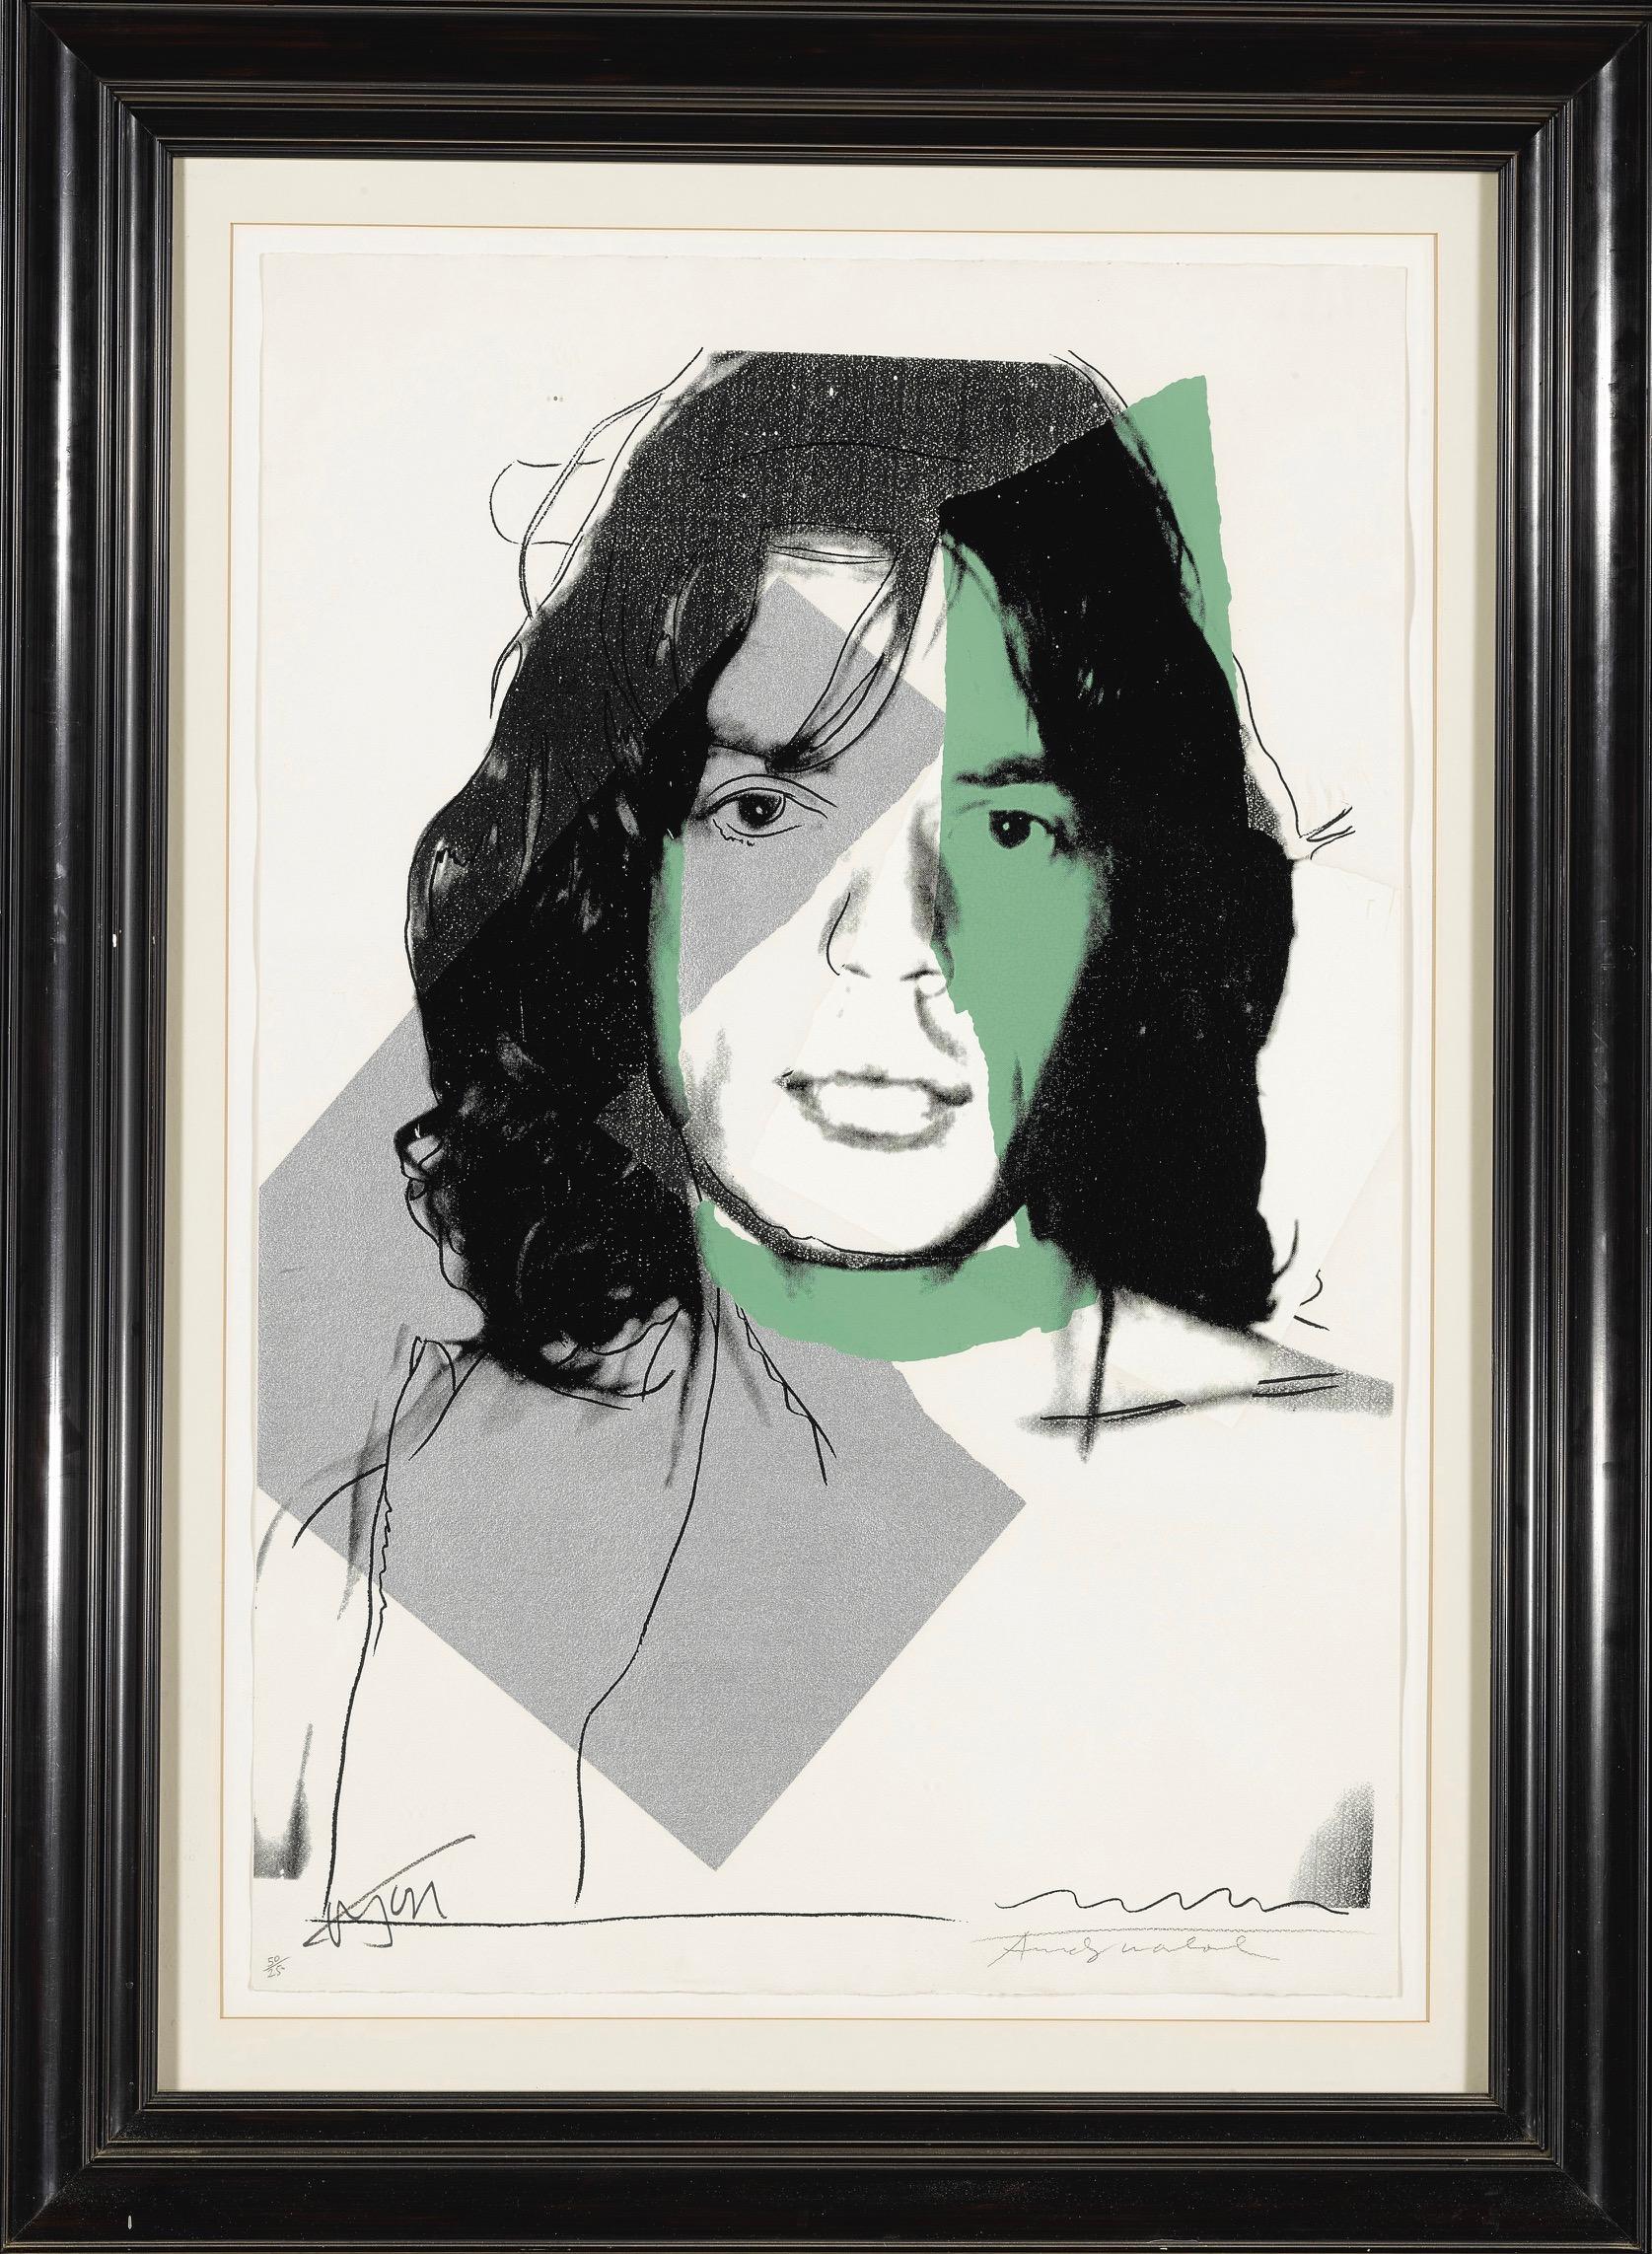 Mick Jagger F&S II.138 - Print by Andy Warhol